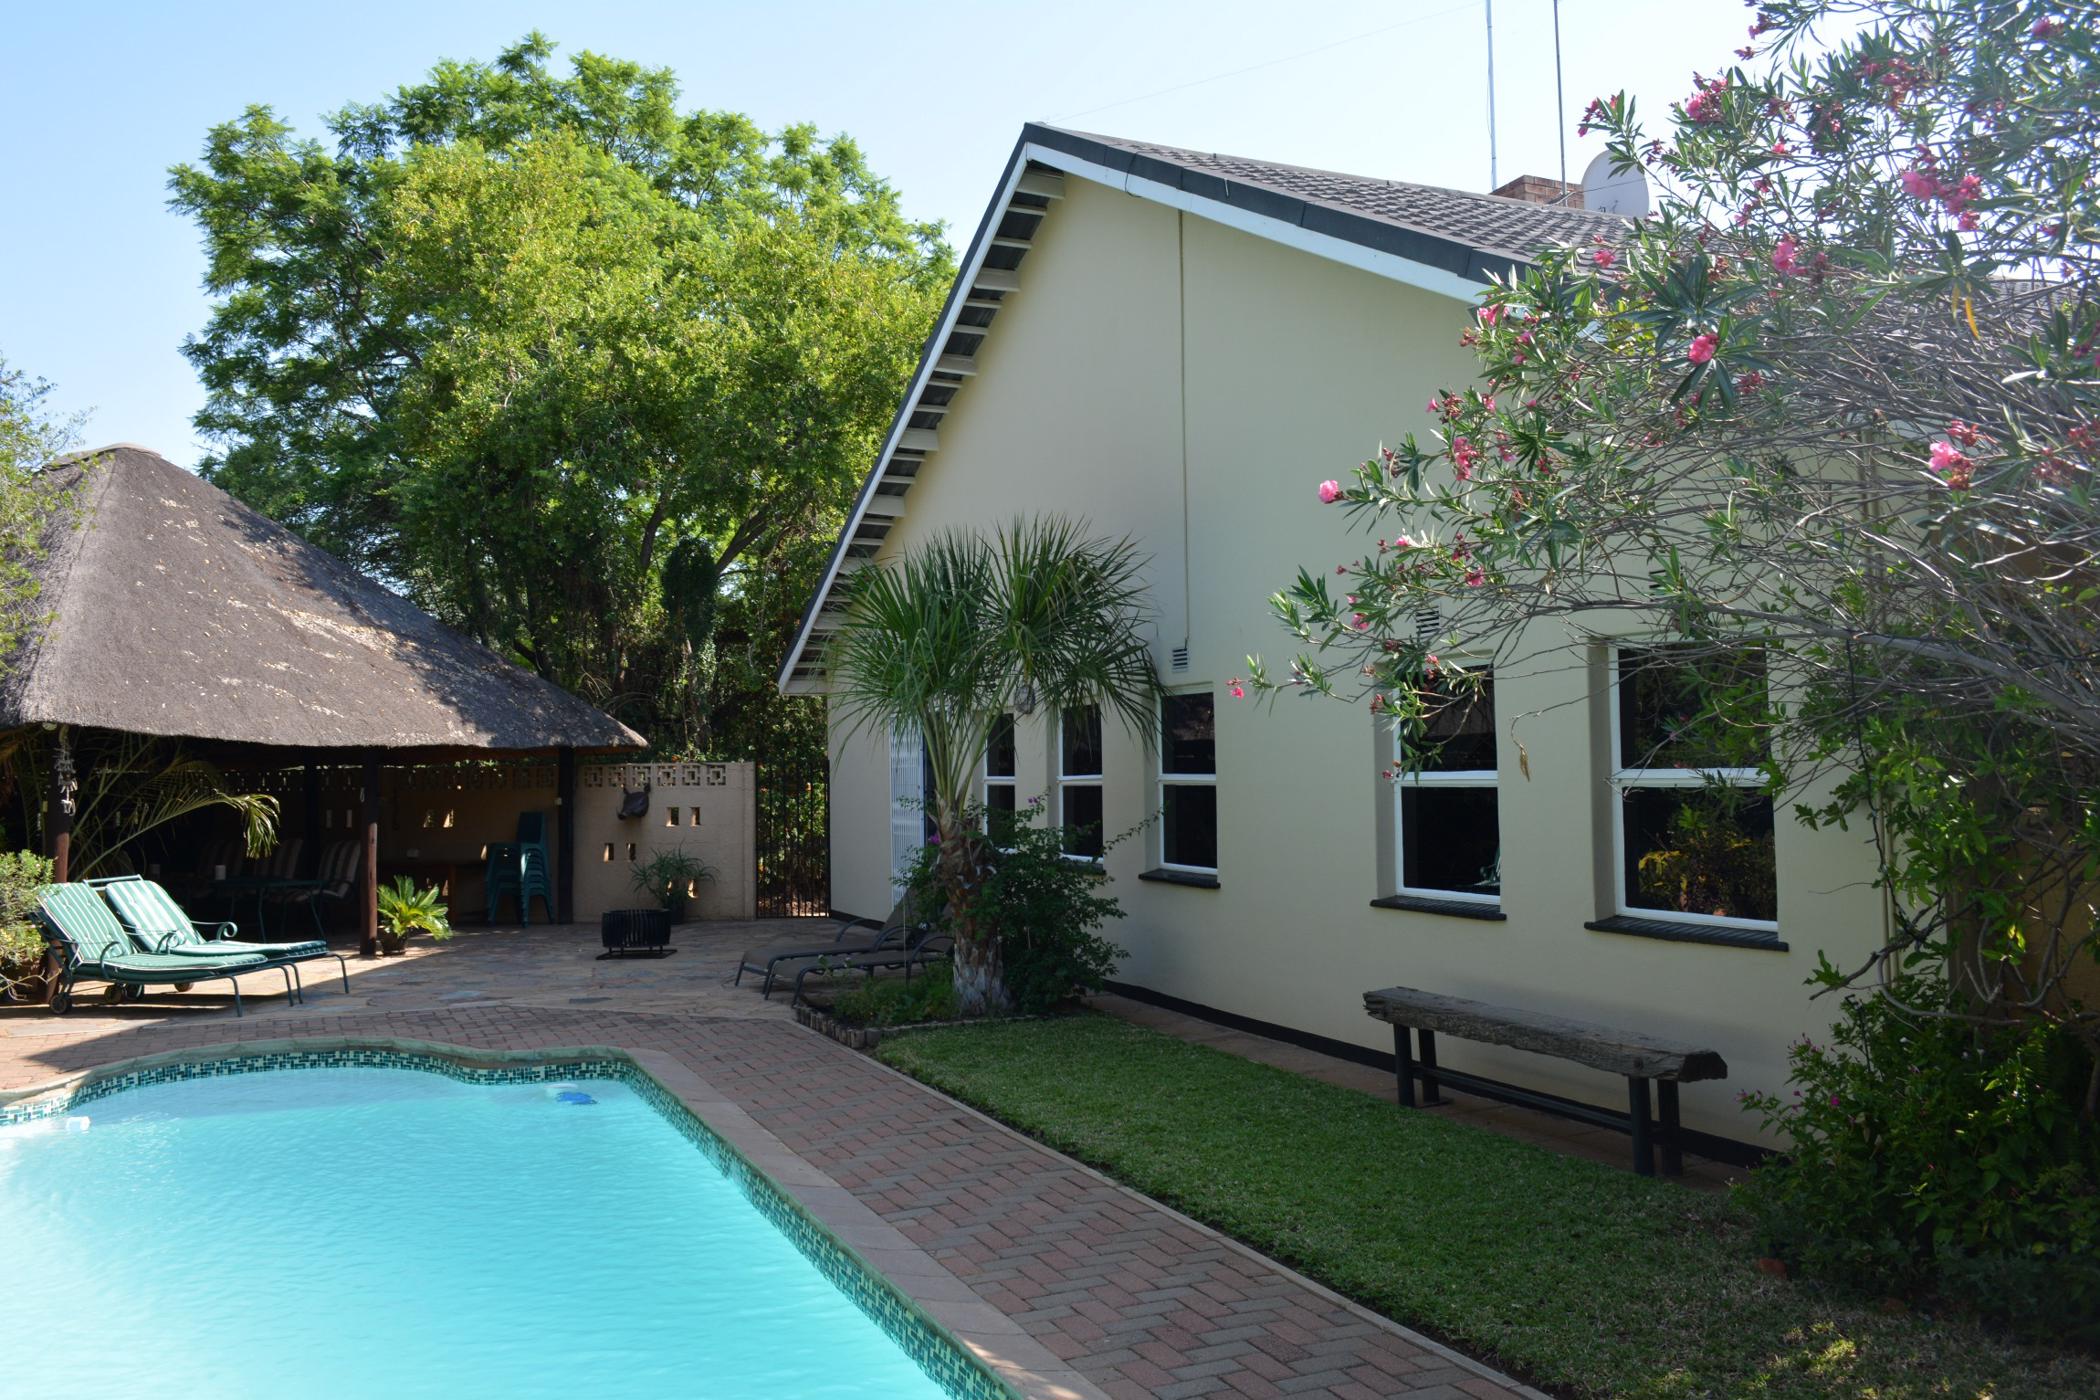 4 Bedroom House For Sale | Gaborone North (Botswana) | 3BO1432249 | Pam